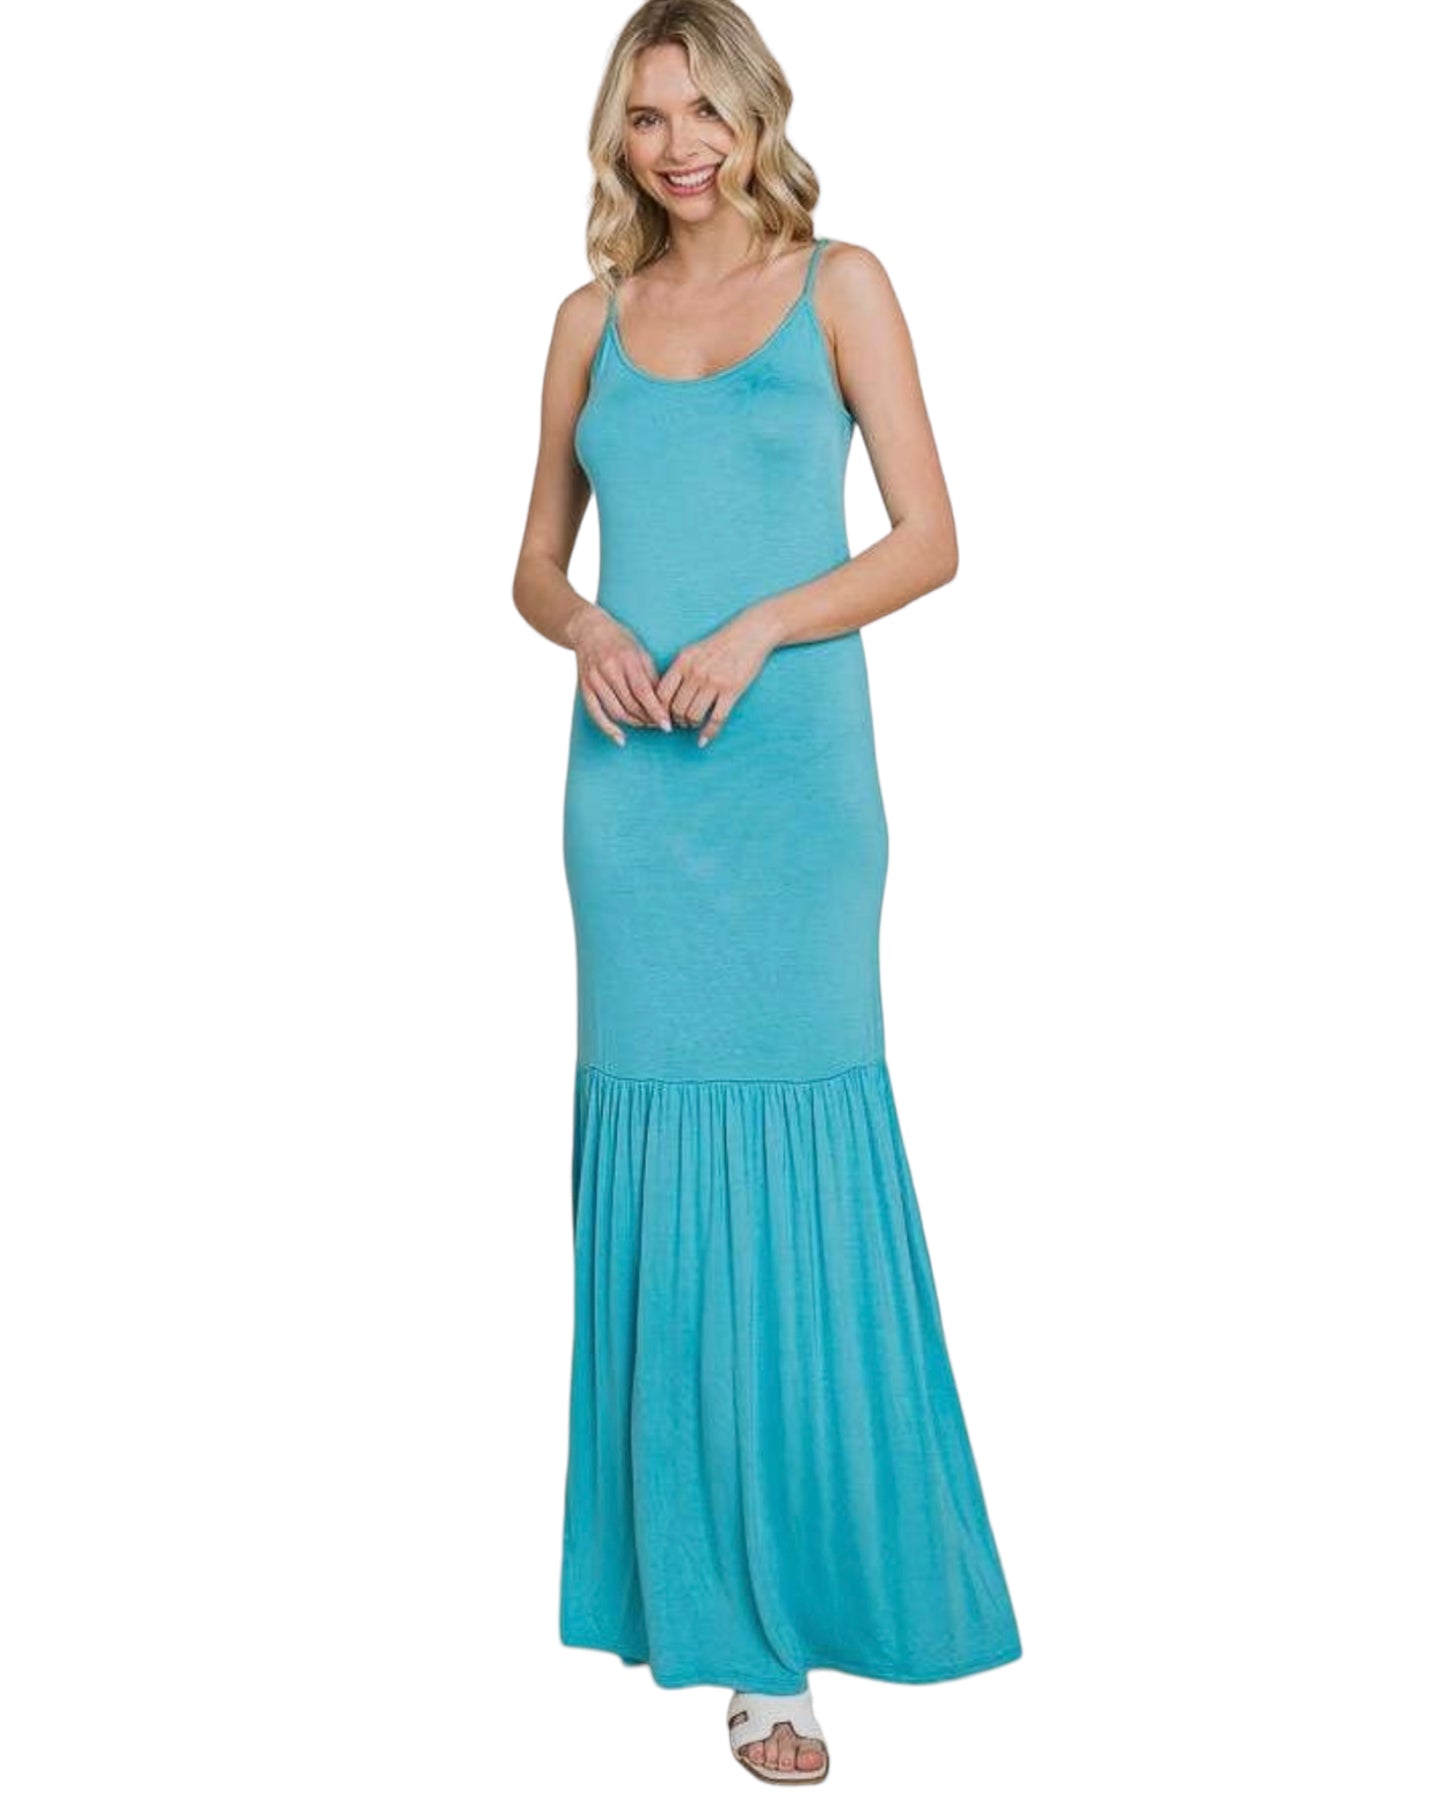 Aqua Maxi Dress - Only Size Large Left